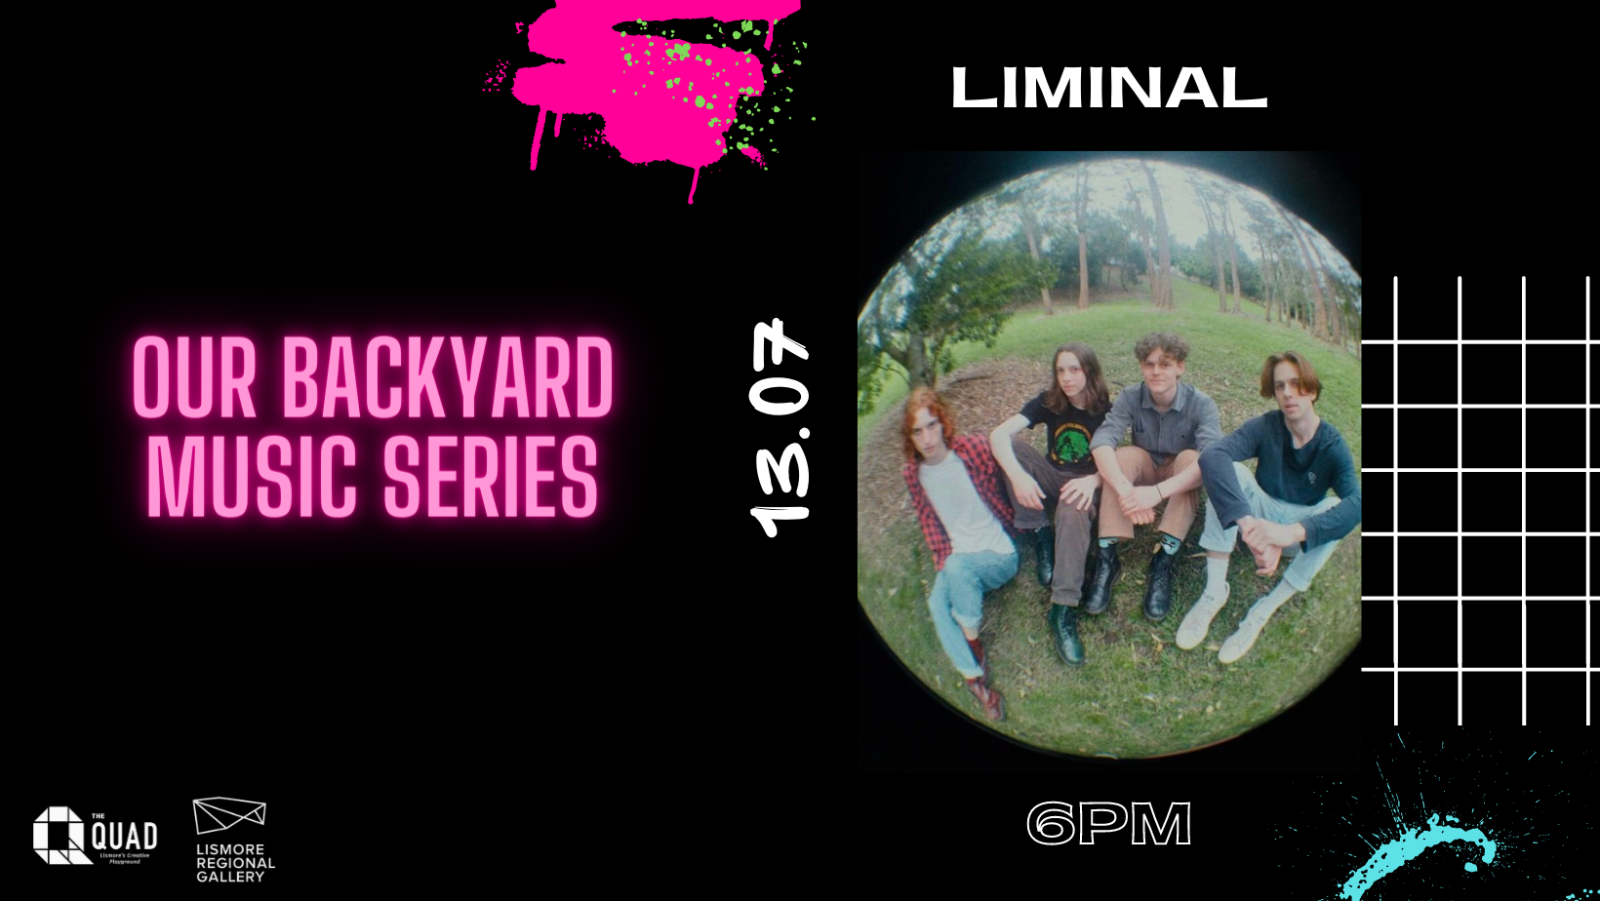 Our Backyard Music Series - Liminal